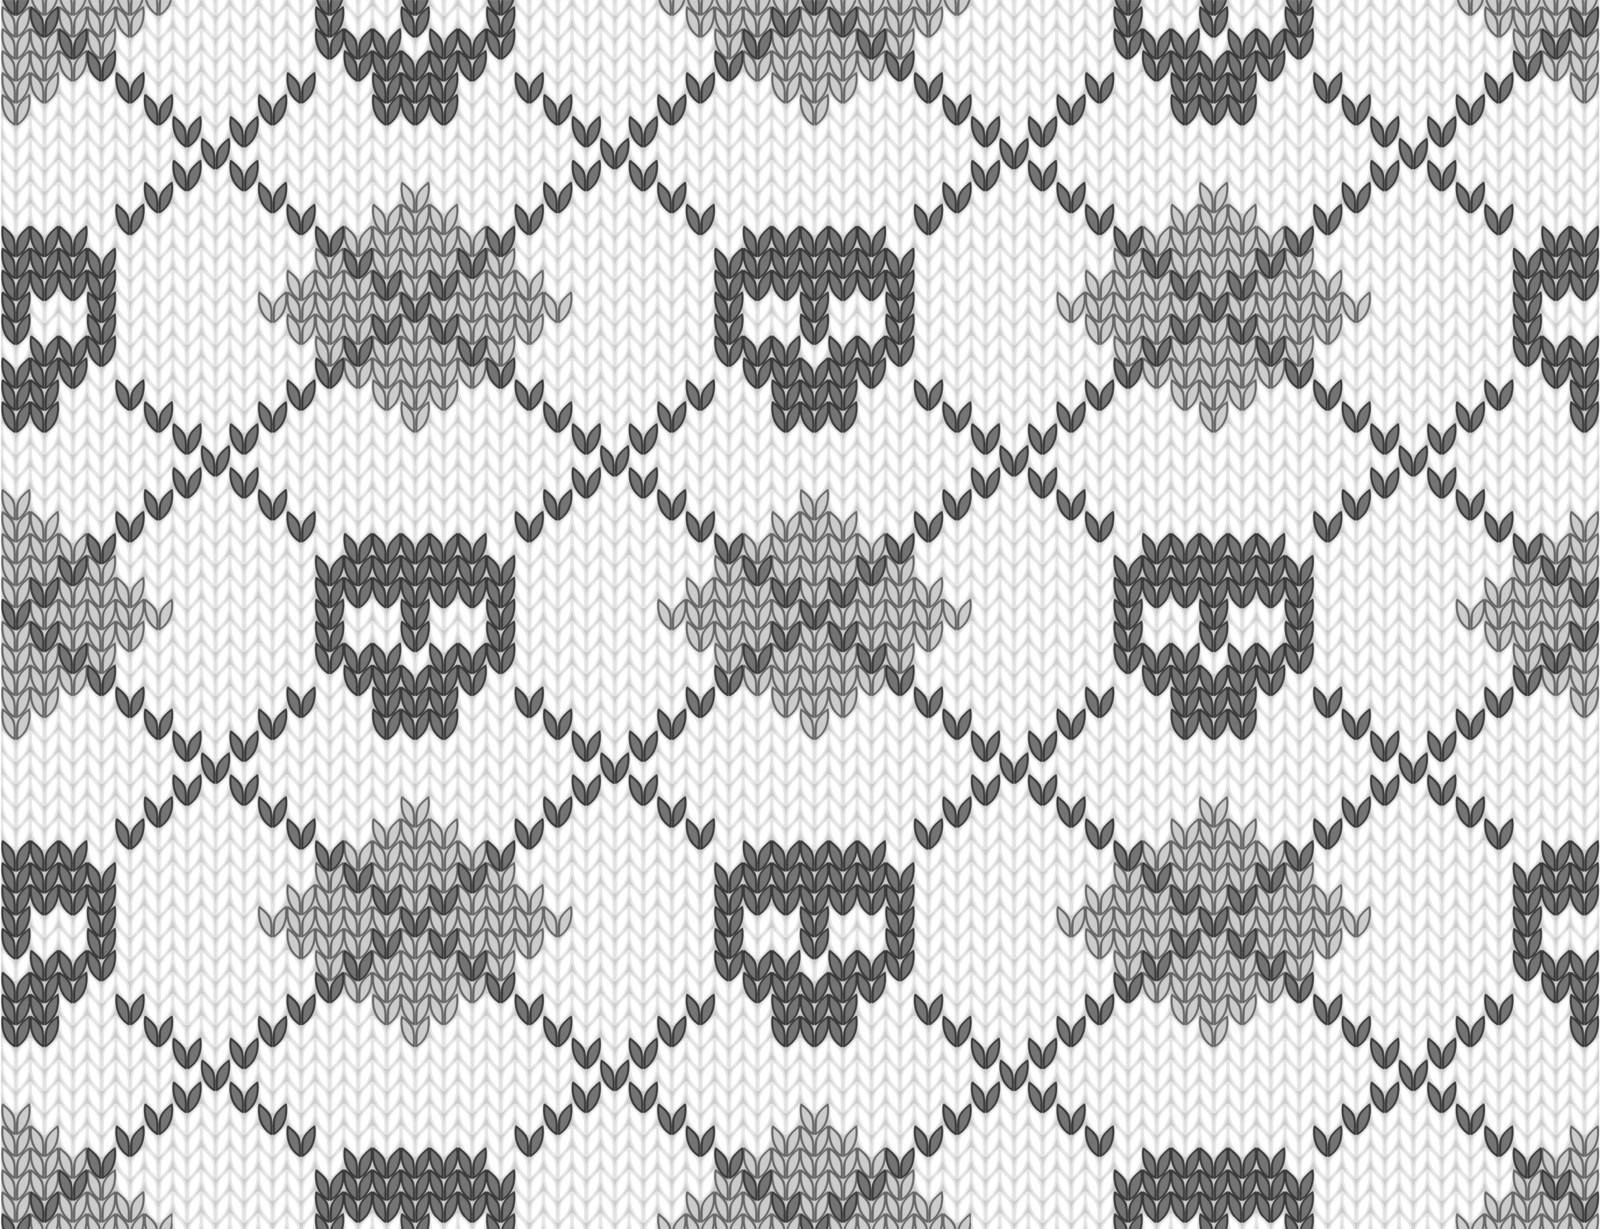 Knitted pattern with skulls by evdakovka